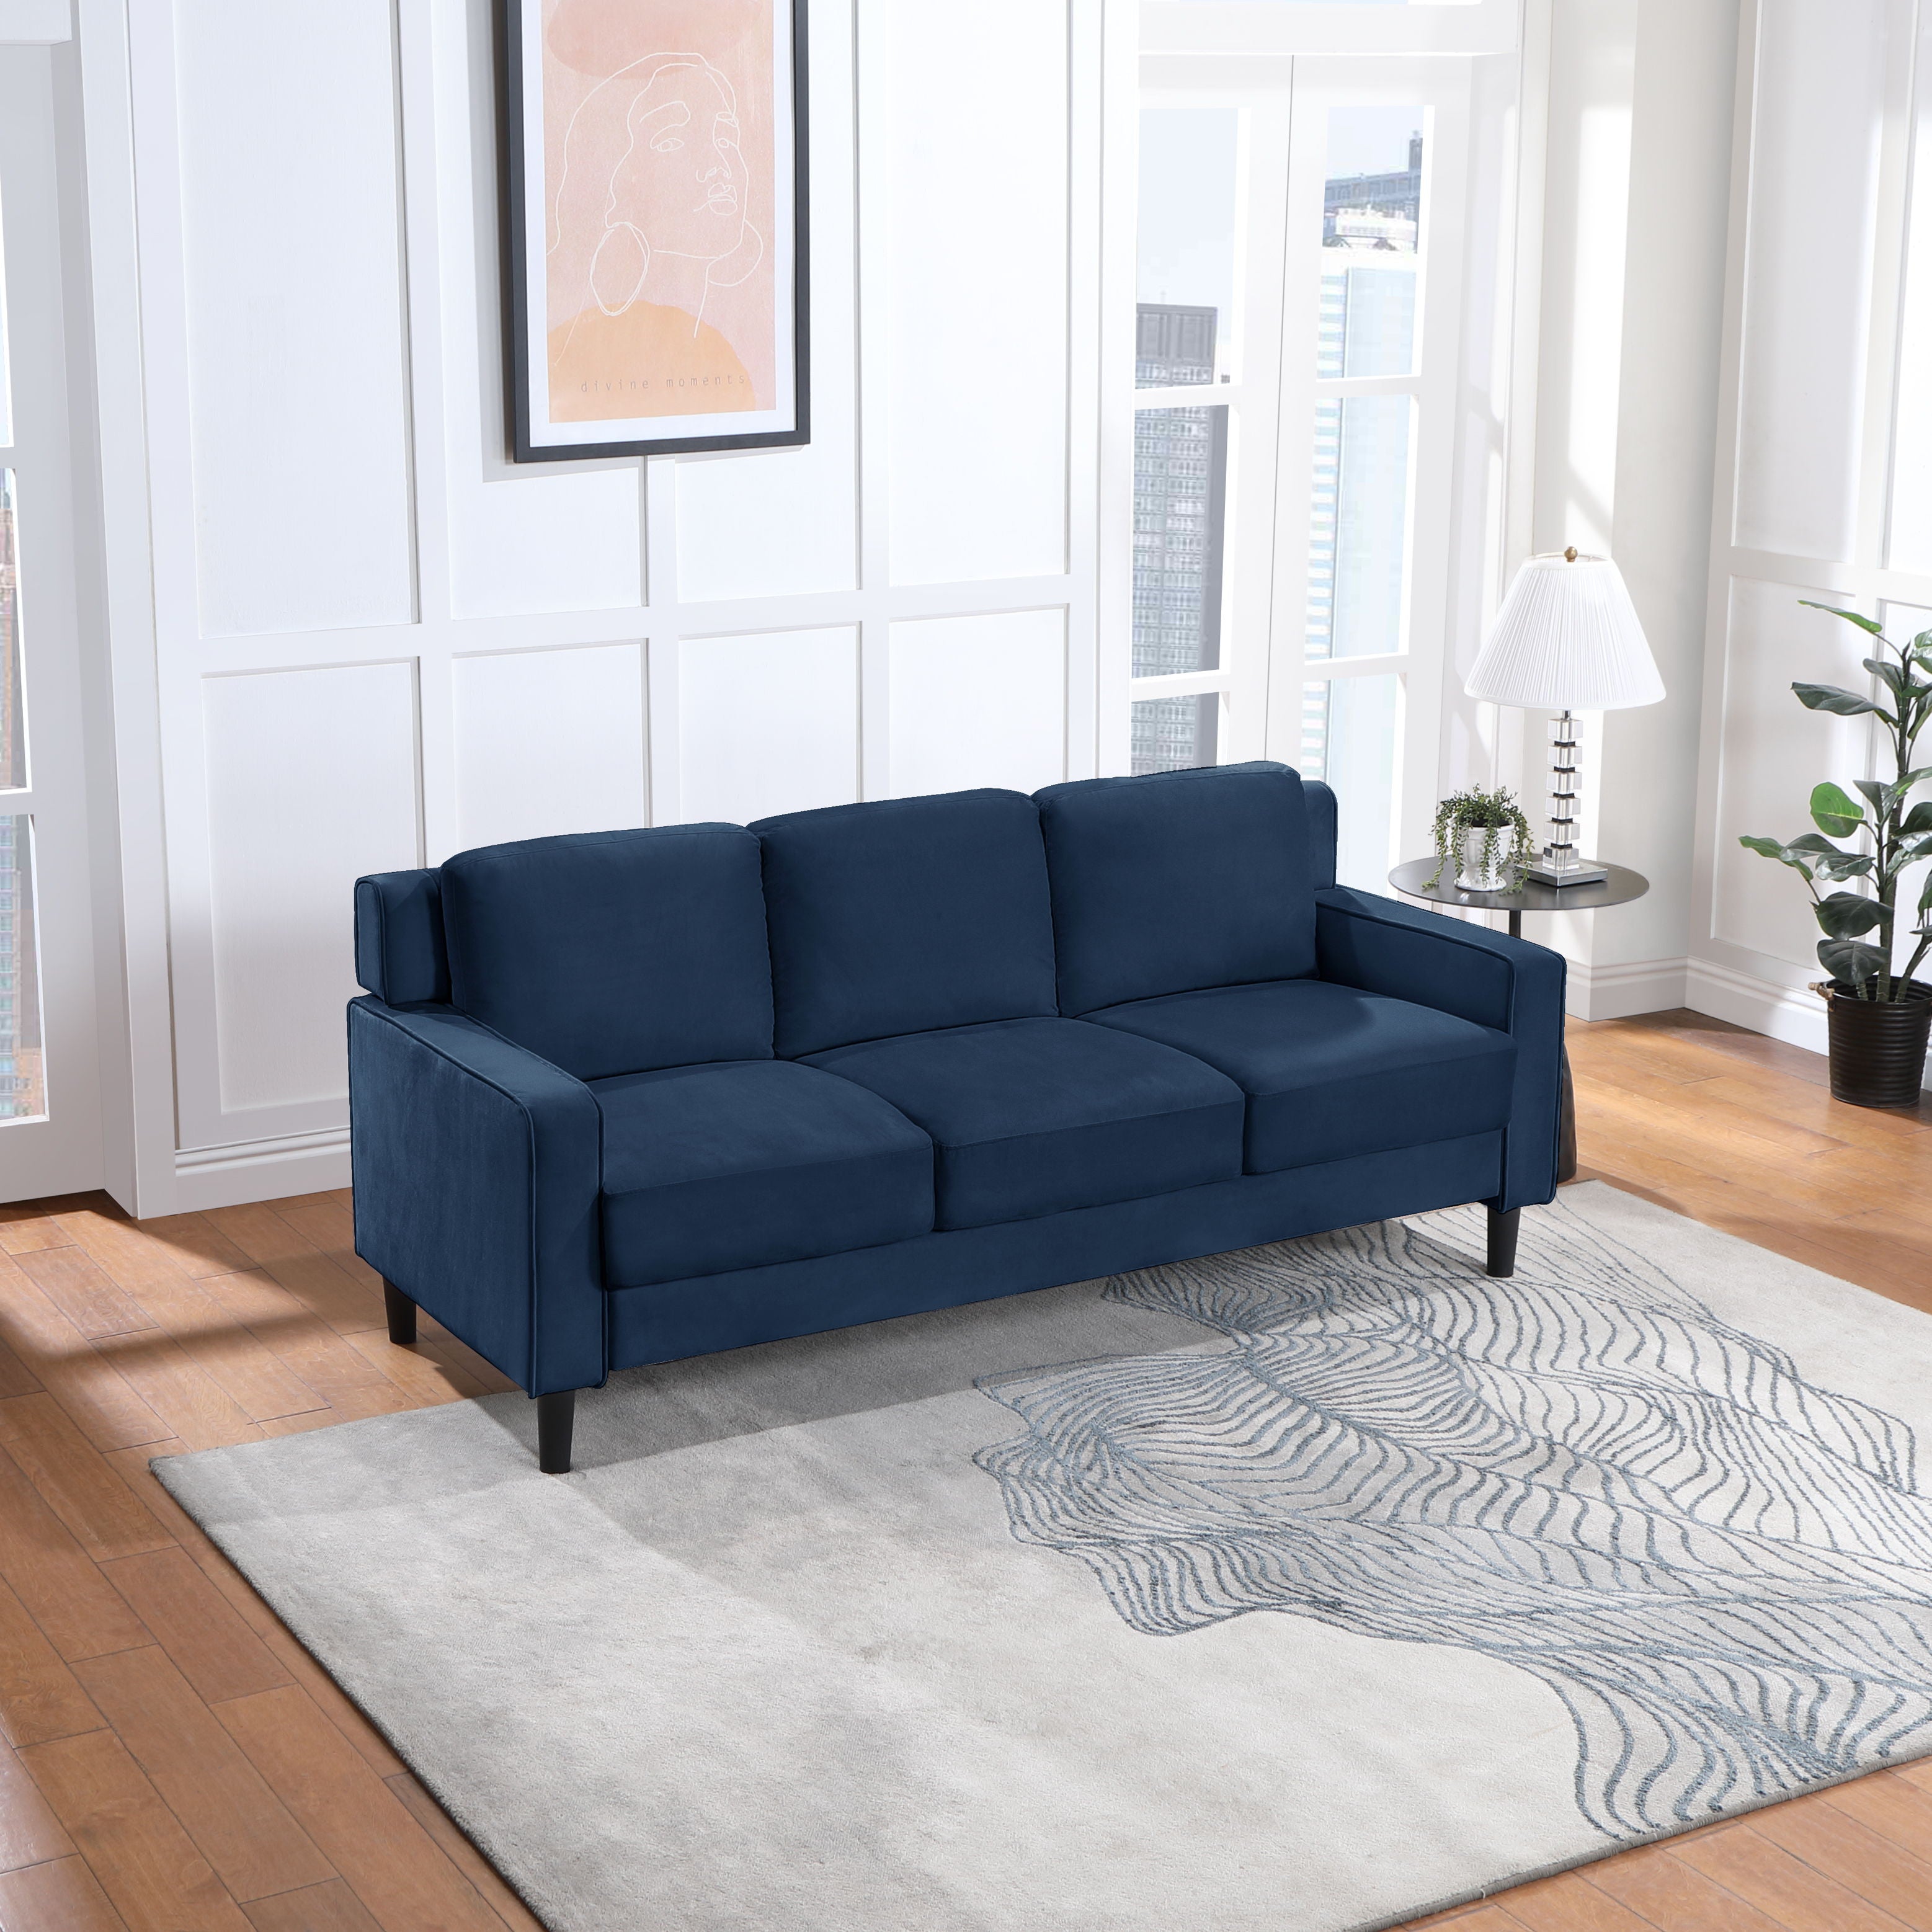 3 Seater Sofa For Small Space, Bedroom, Apartment, Studio - Dark Blue